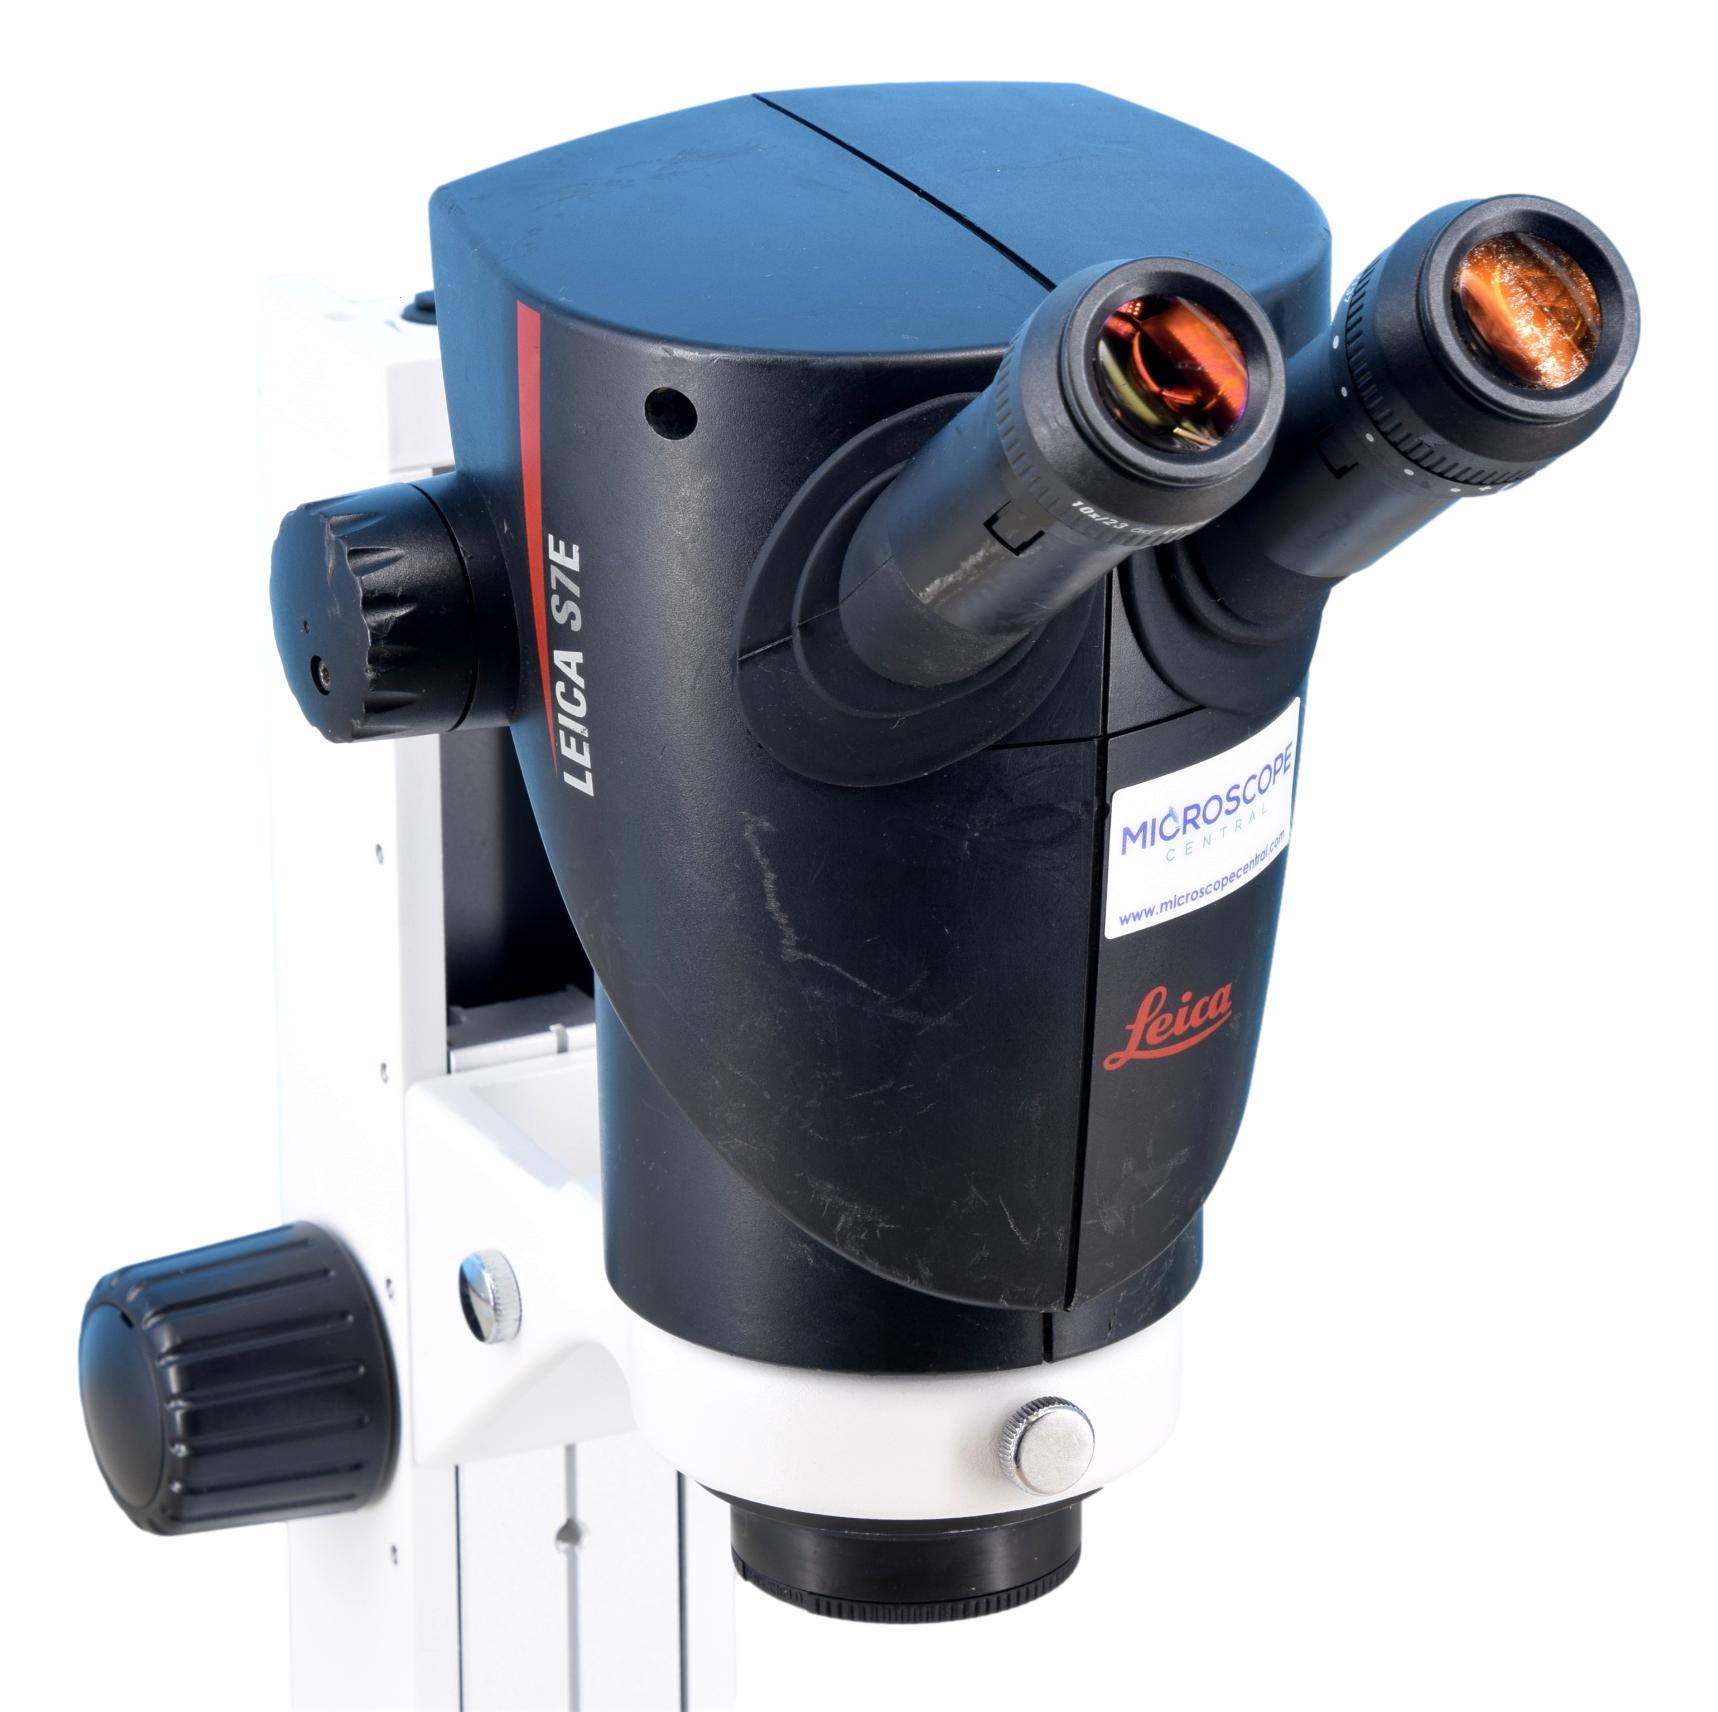 Leica S7 E Stereo Zoom Microscope